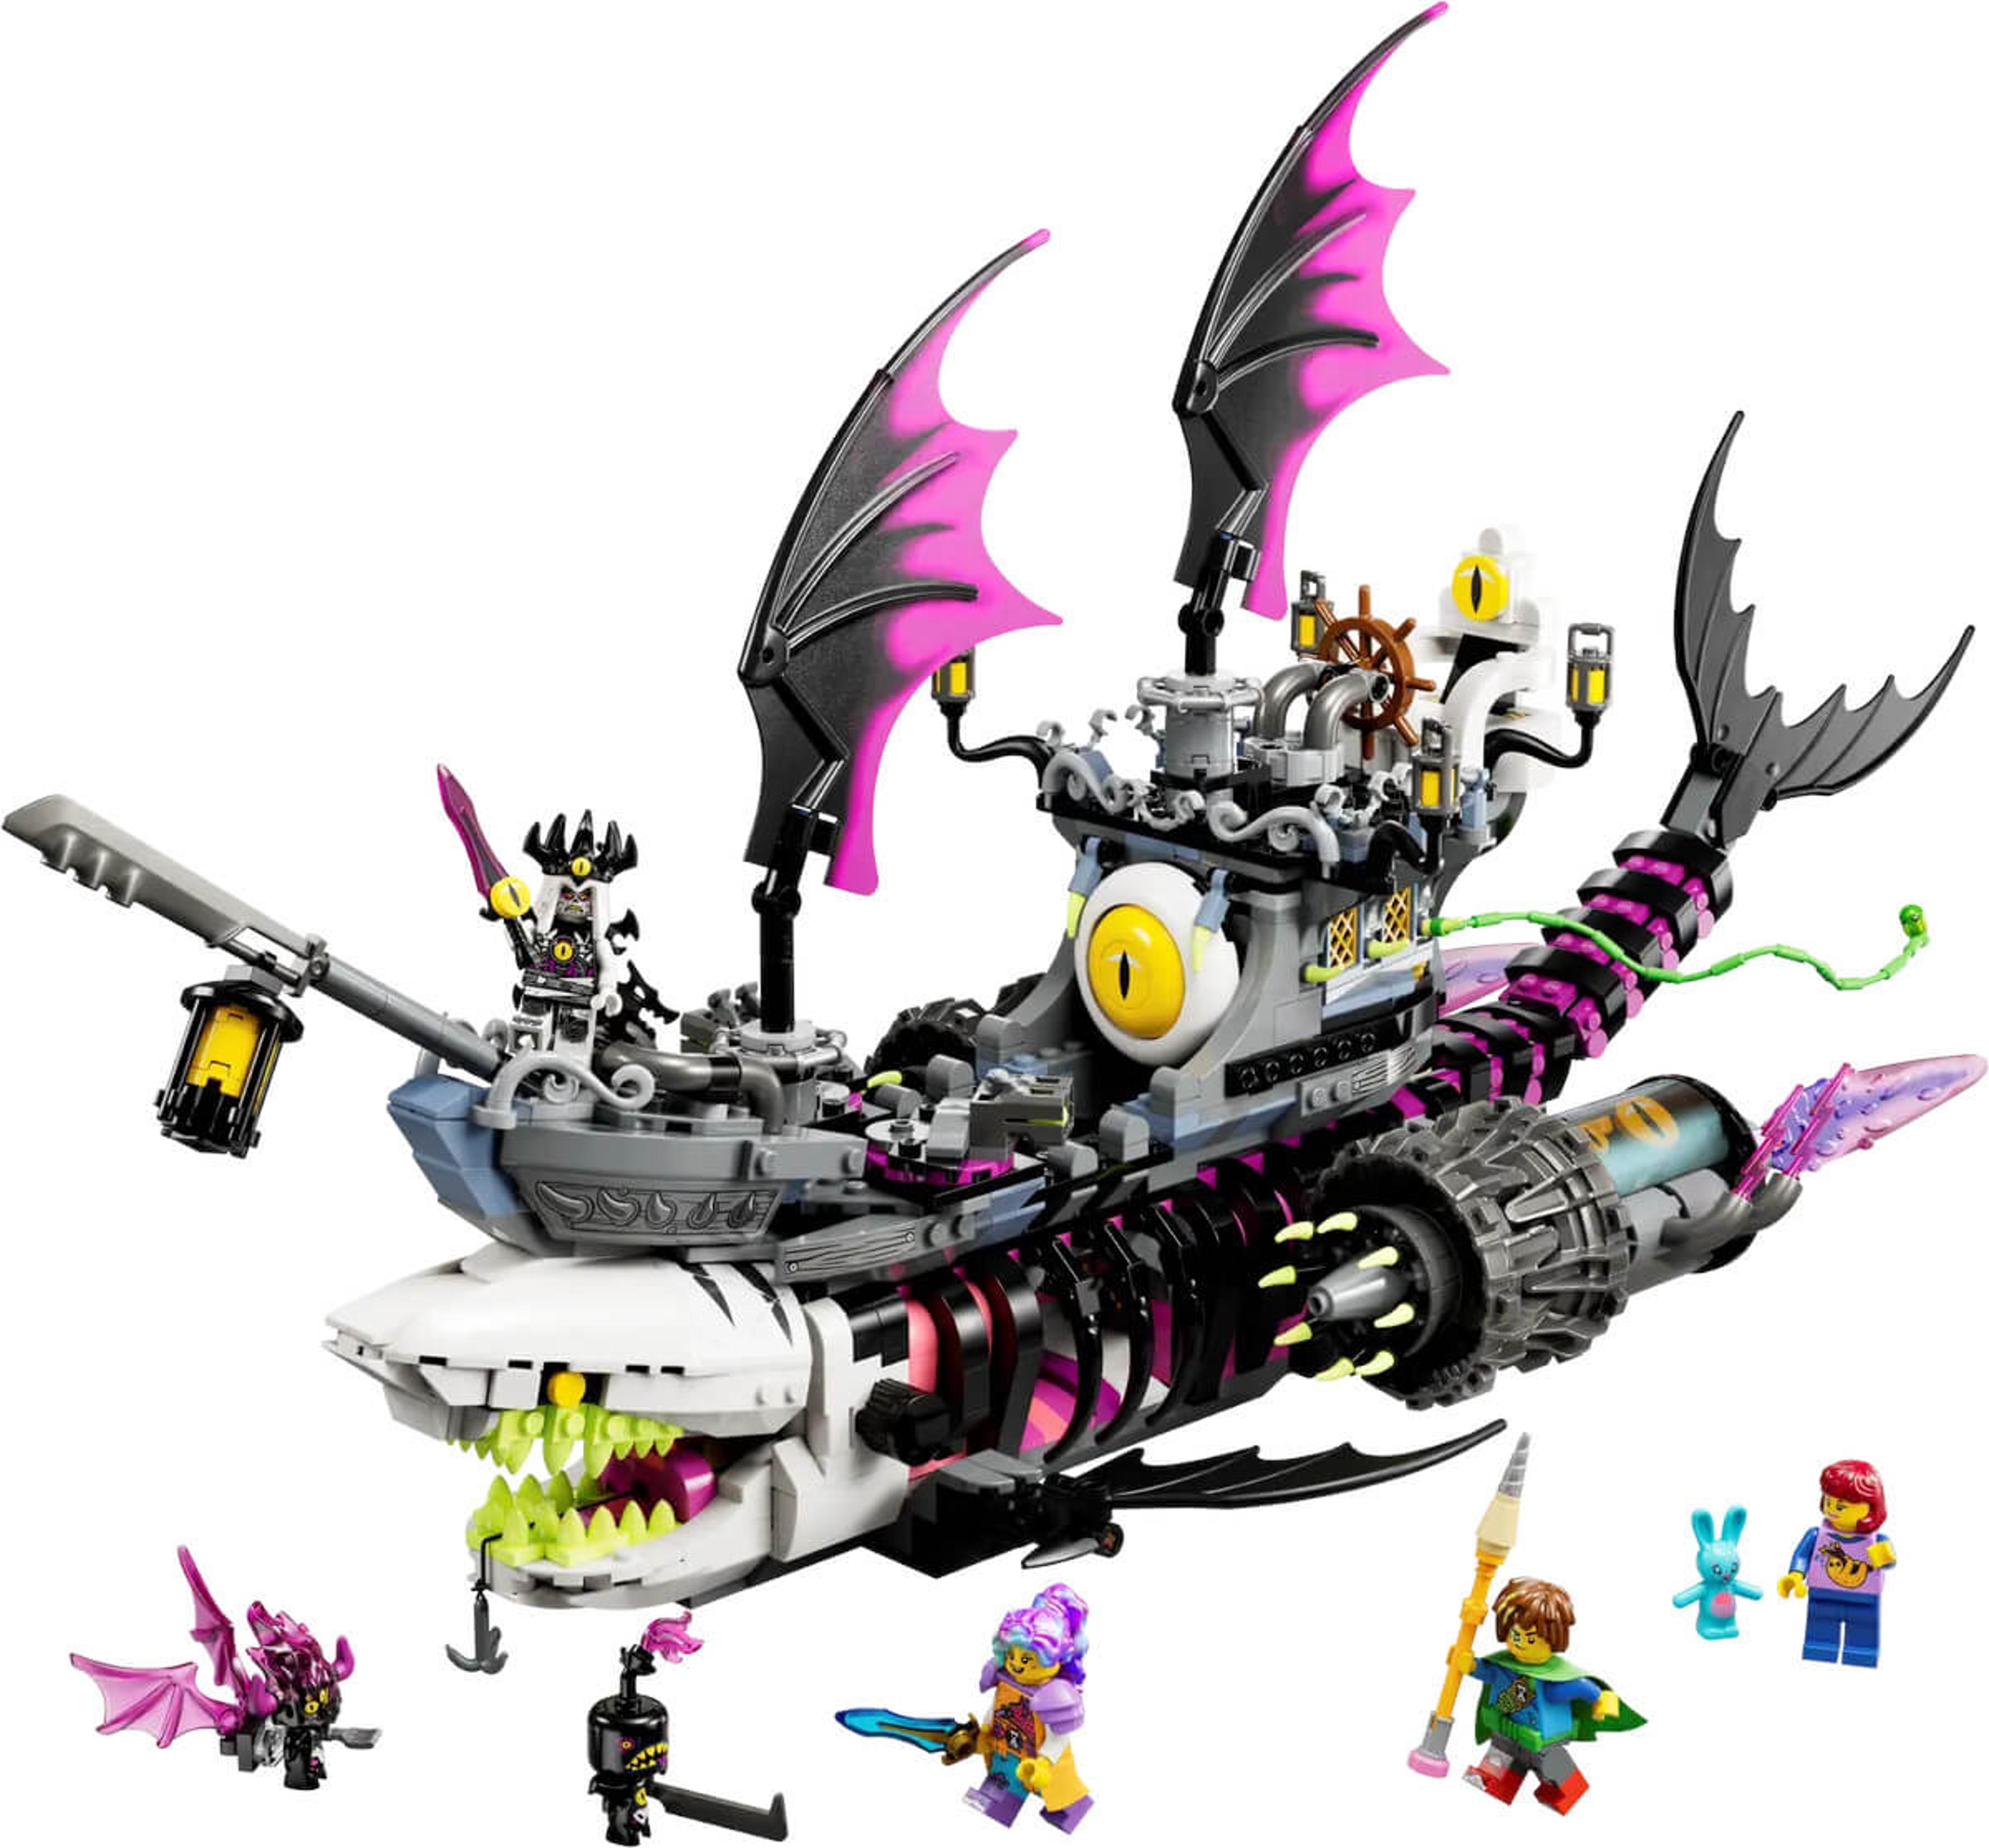 LEGO DREAMZzz - Nightmare Shark Ship